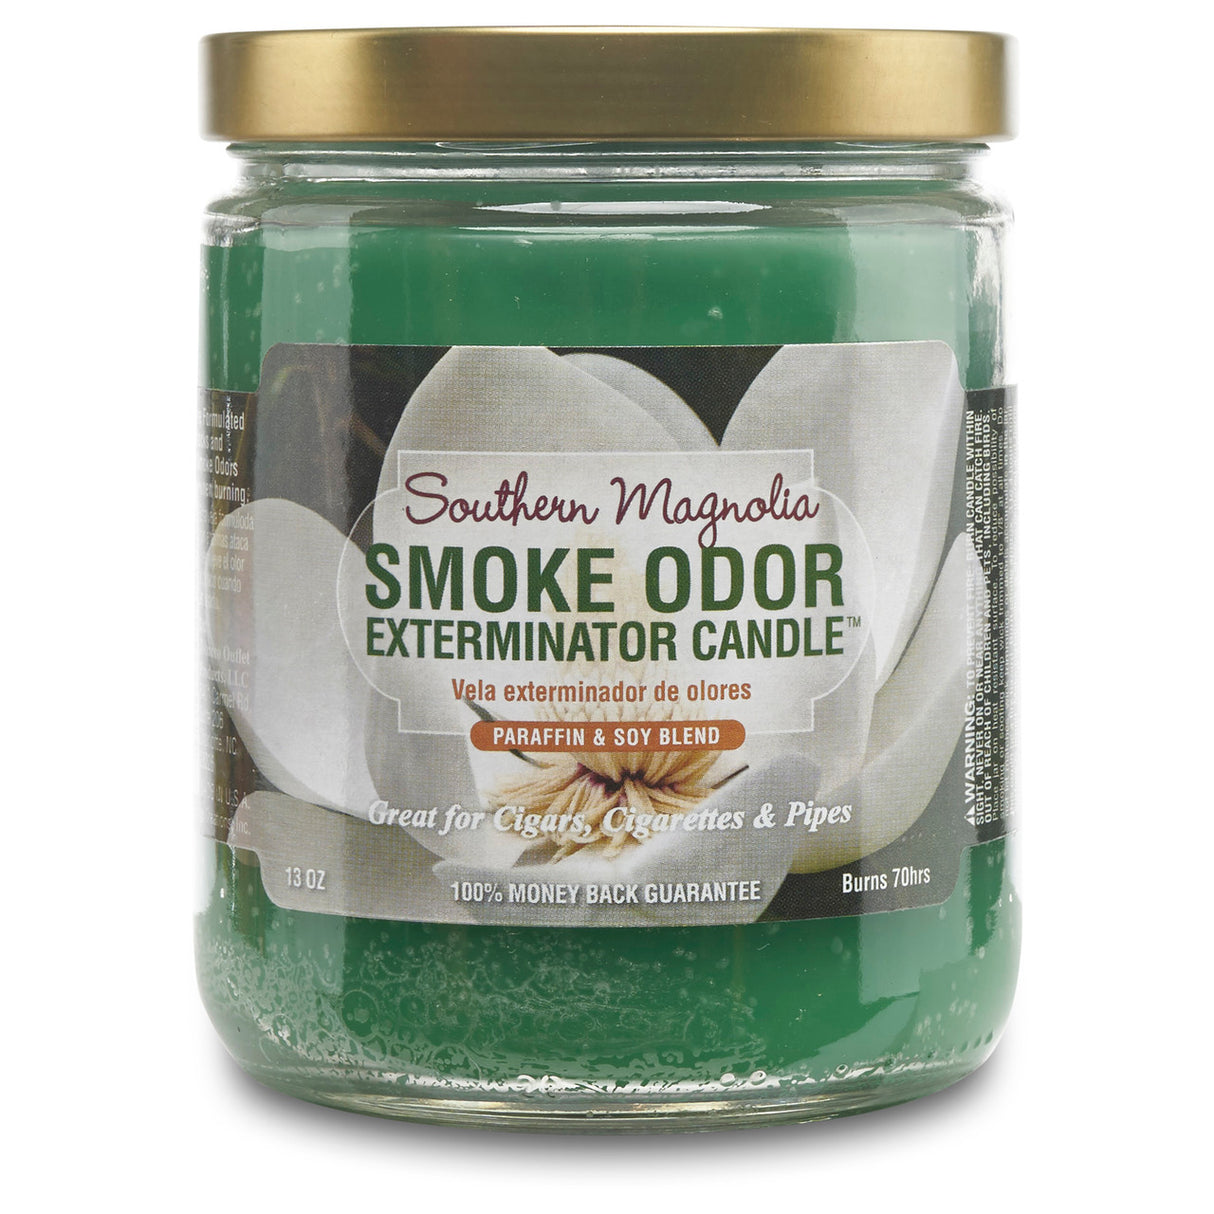 southern magnolia smoke odor exterminator candle for sale